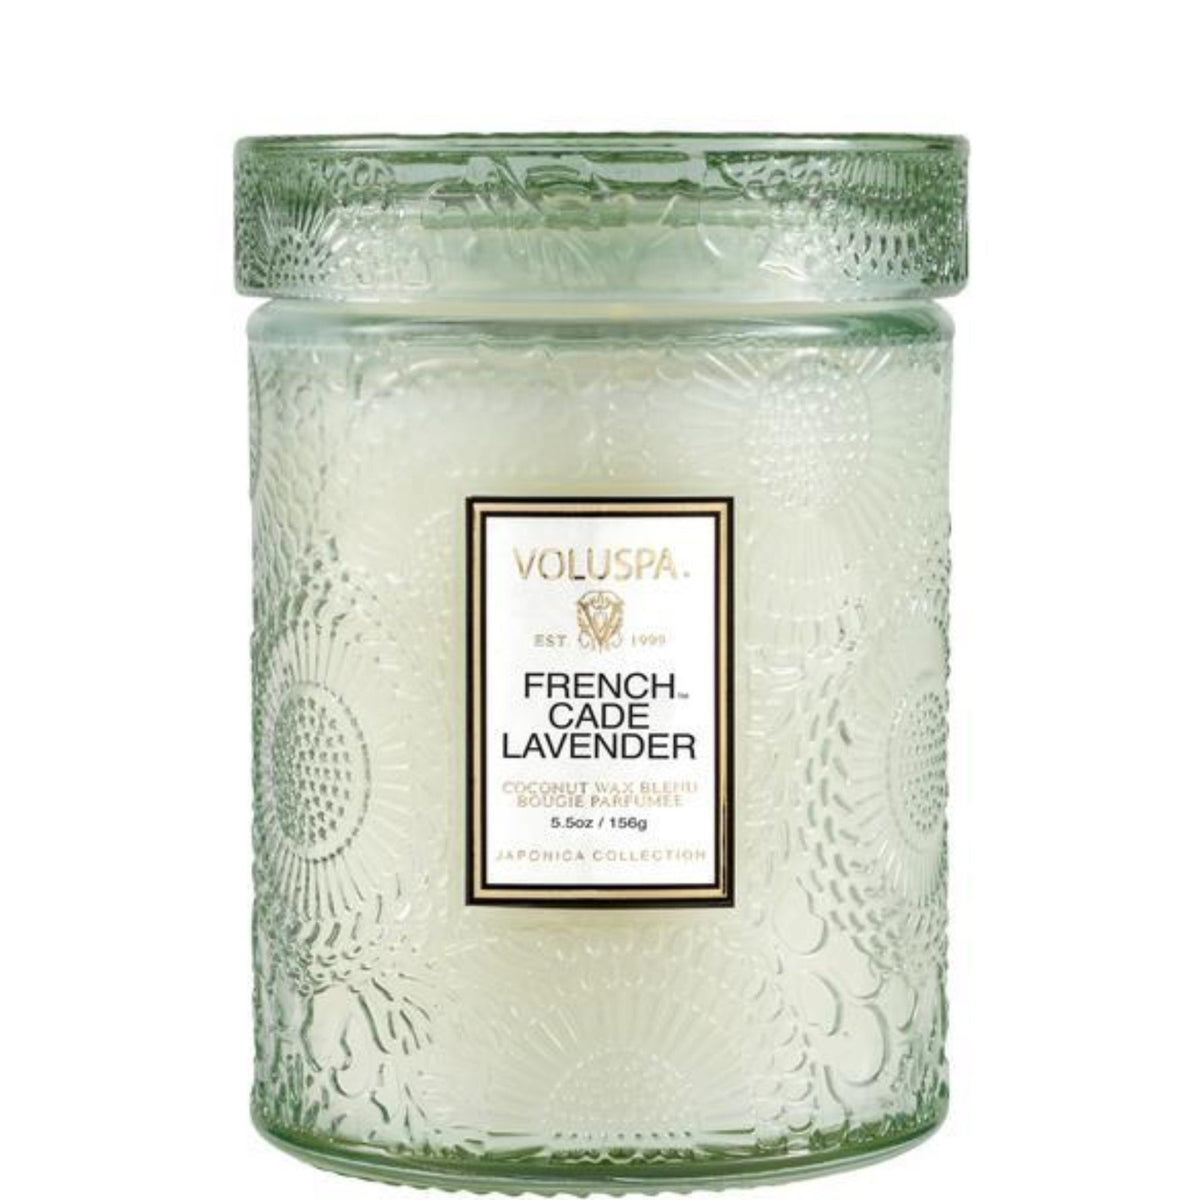 Volupsa: French Cade Lavender Small Jar Candle